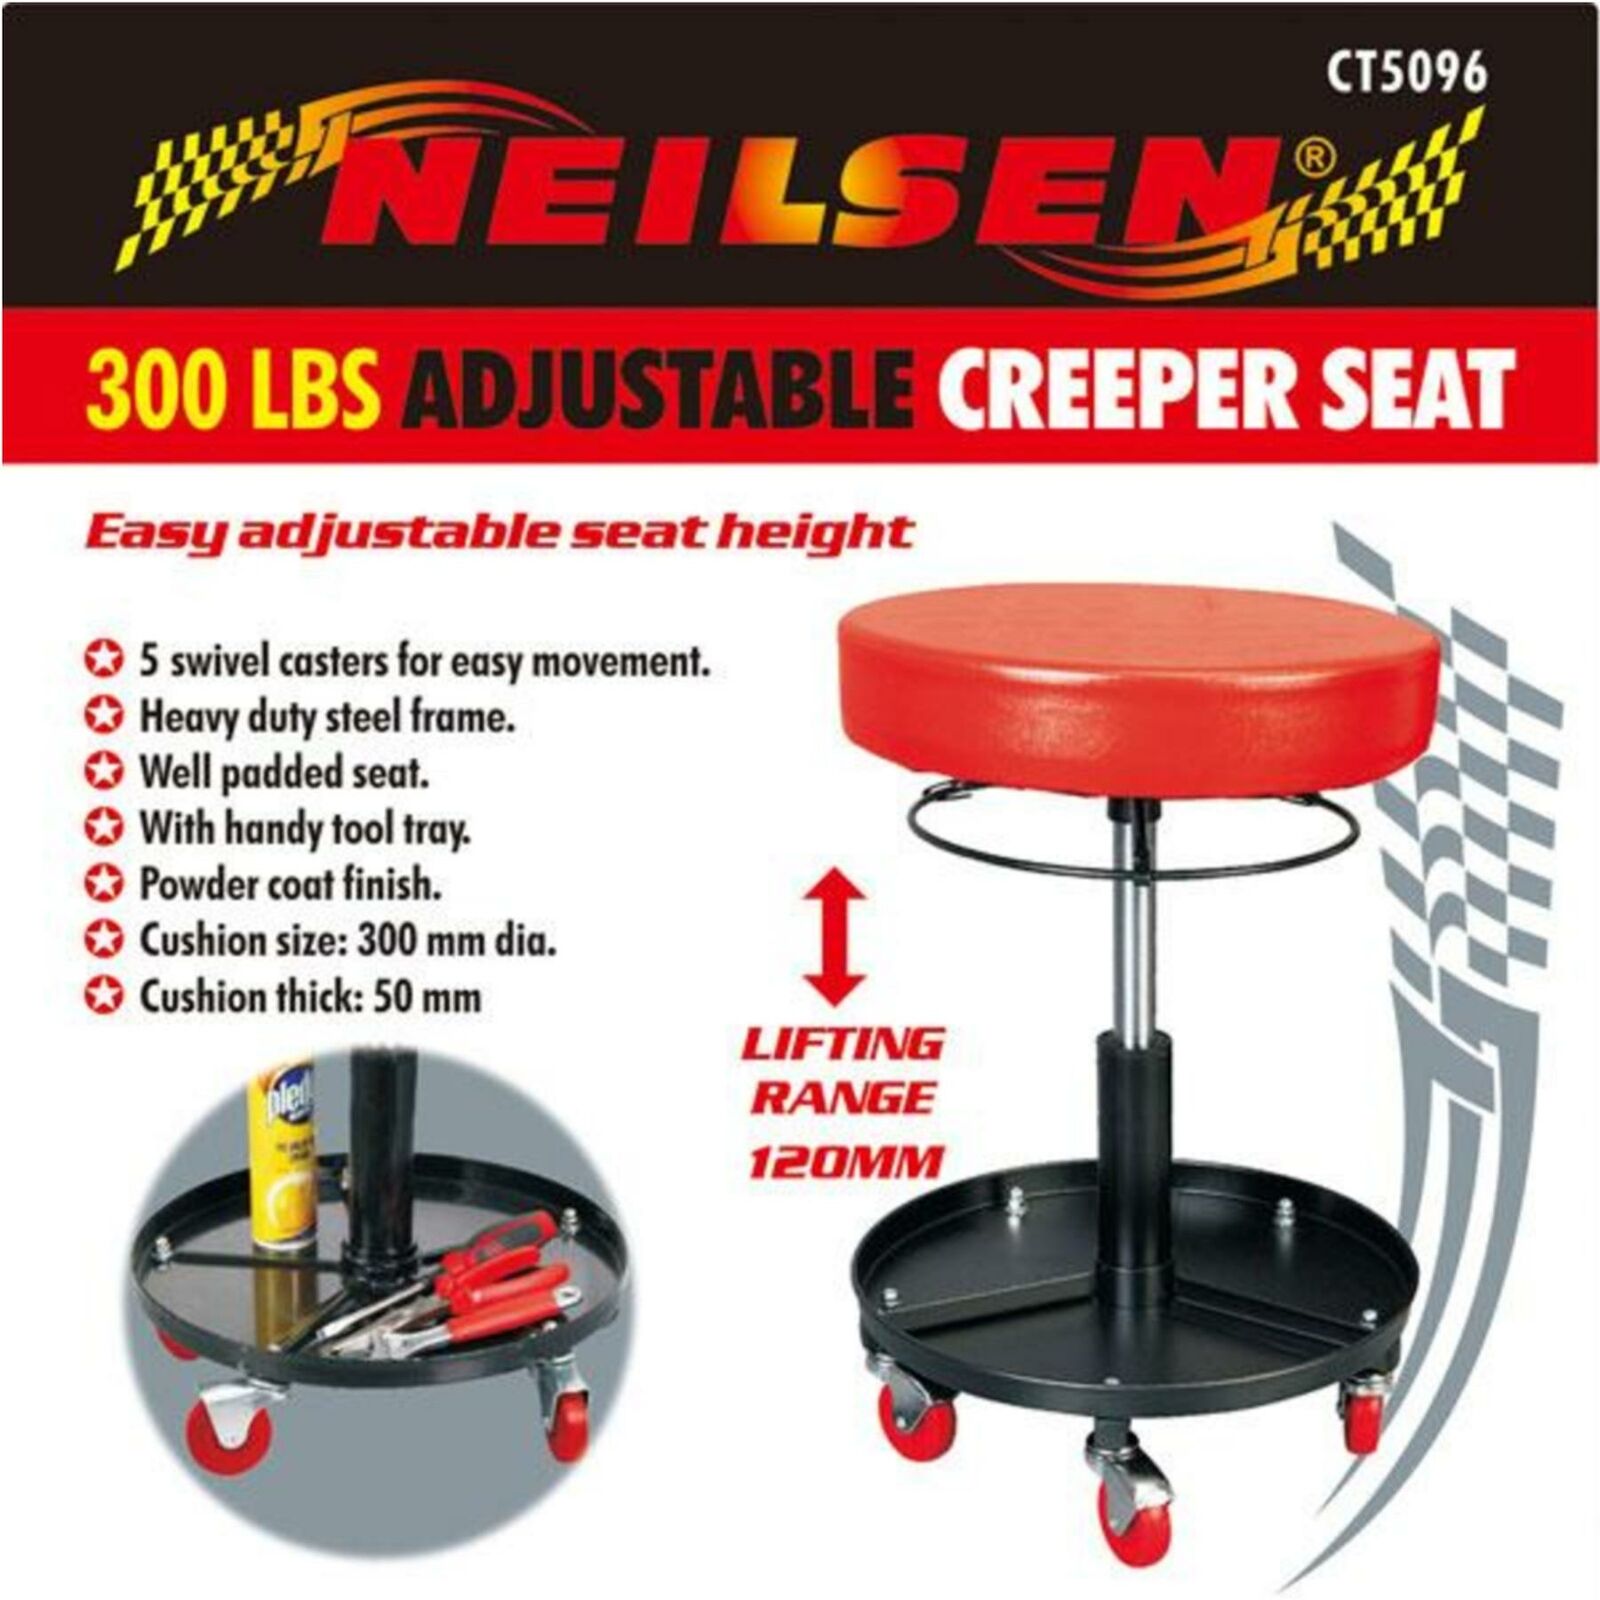 Neilsen Mechanic Round Creeper Mobile Work Chair Stool Trolley Seat